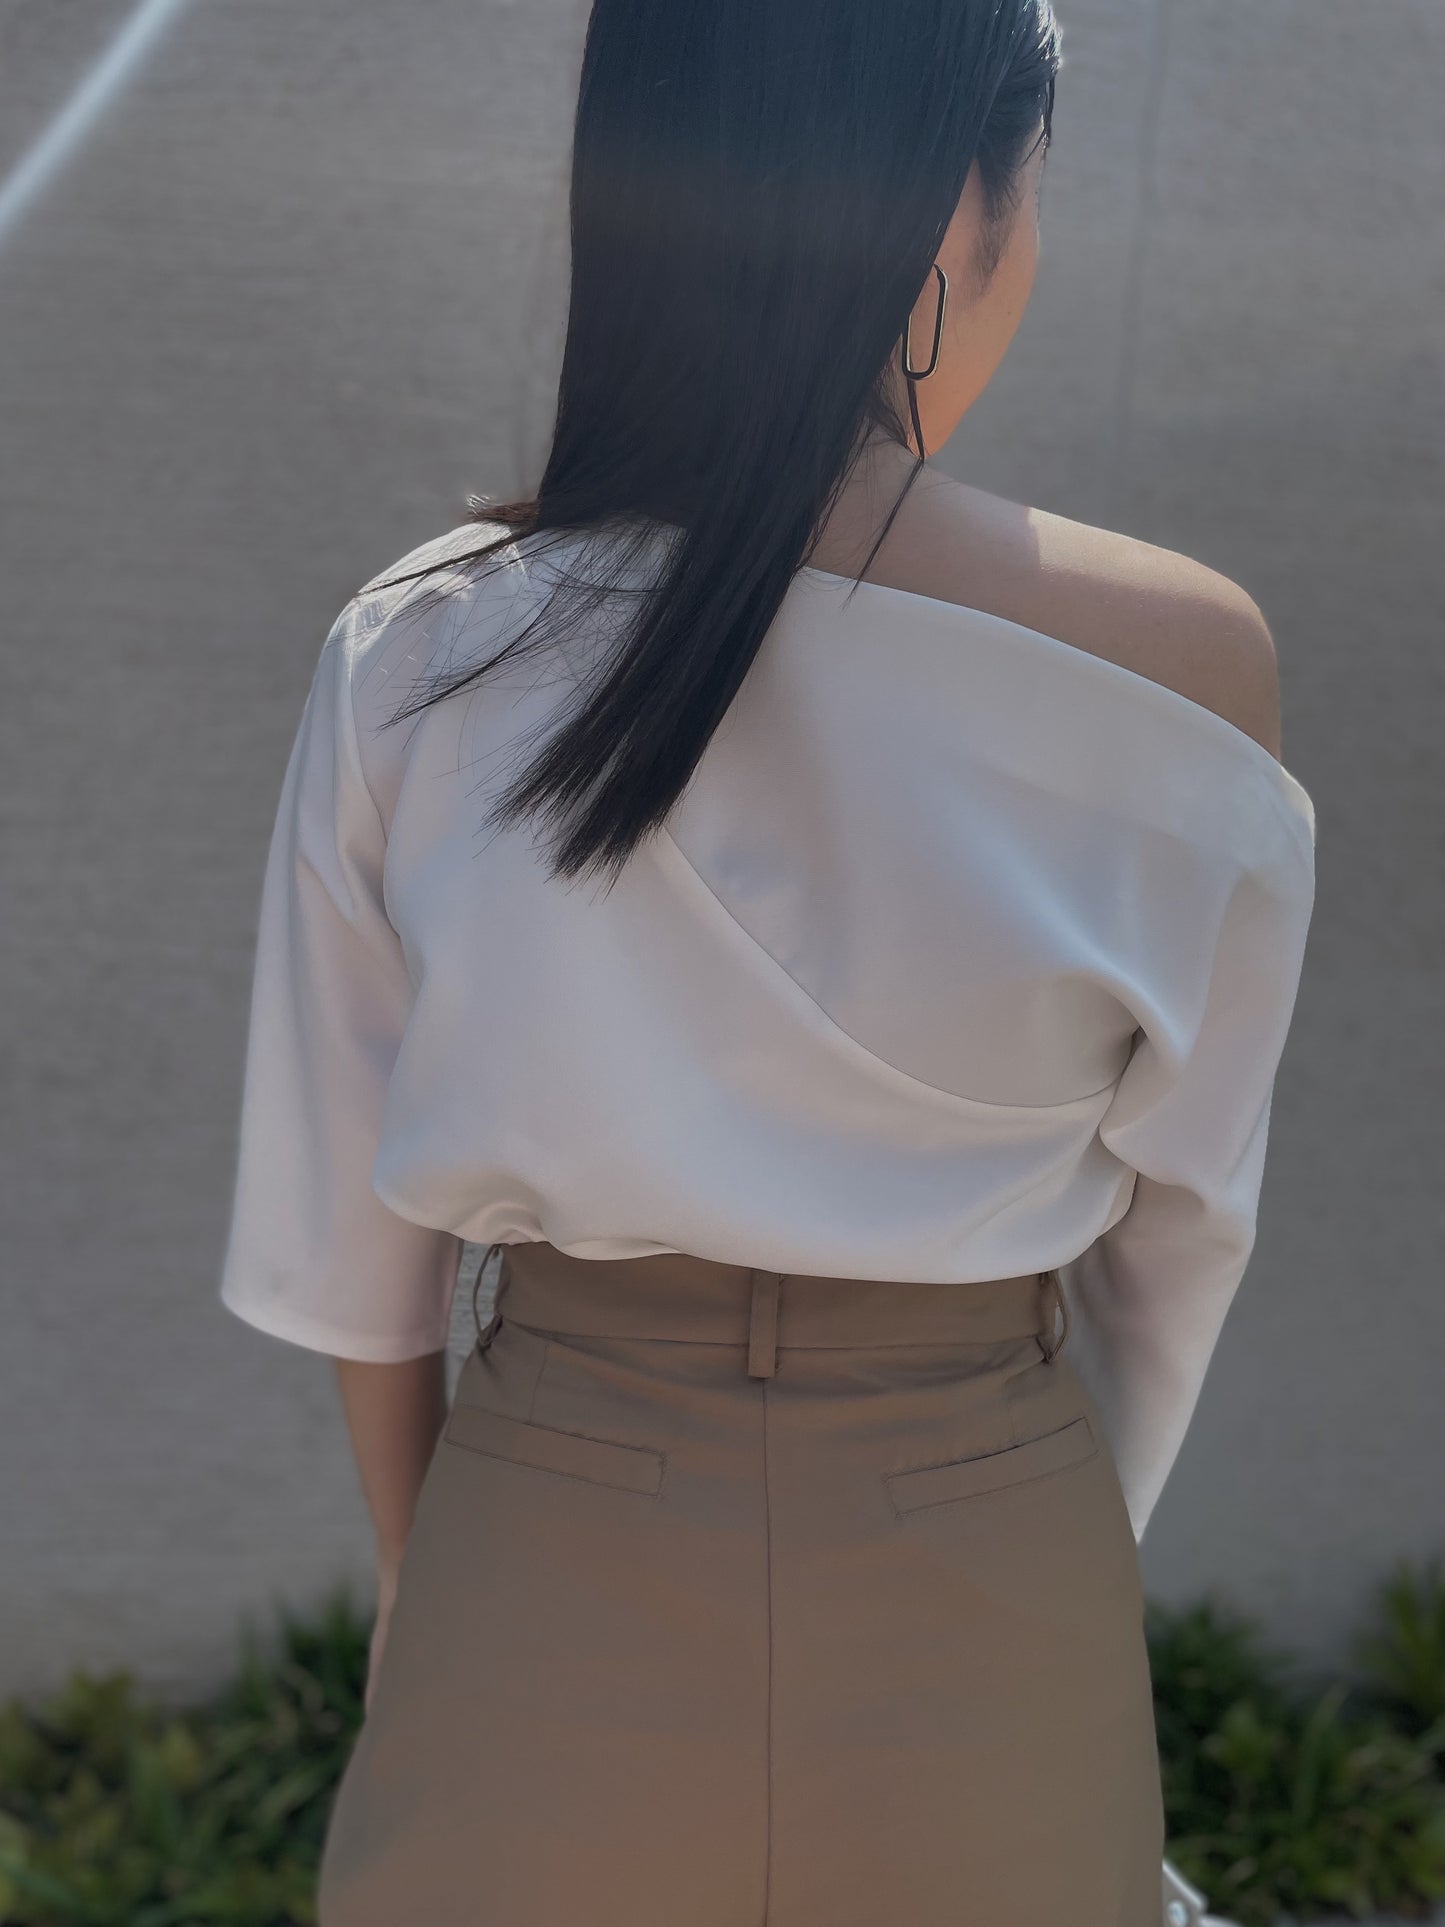 One-Shoulder White Shirt LCHK/9235